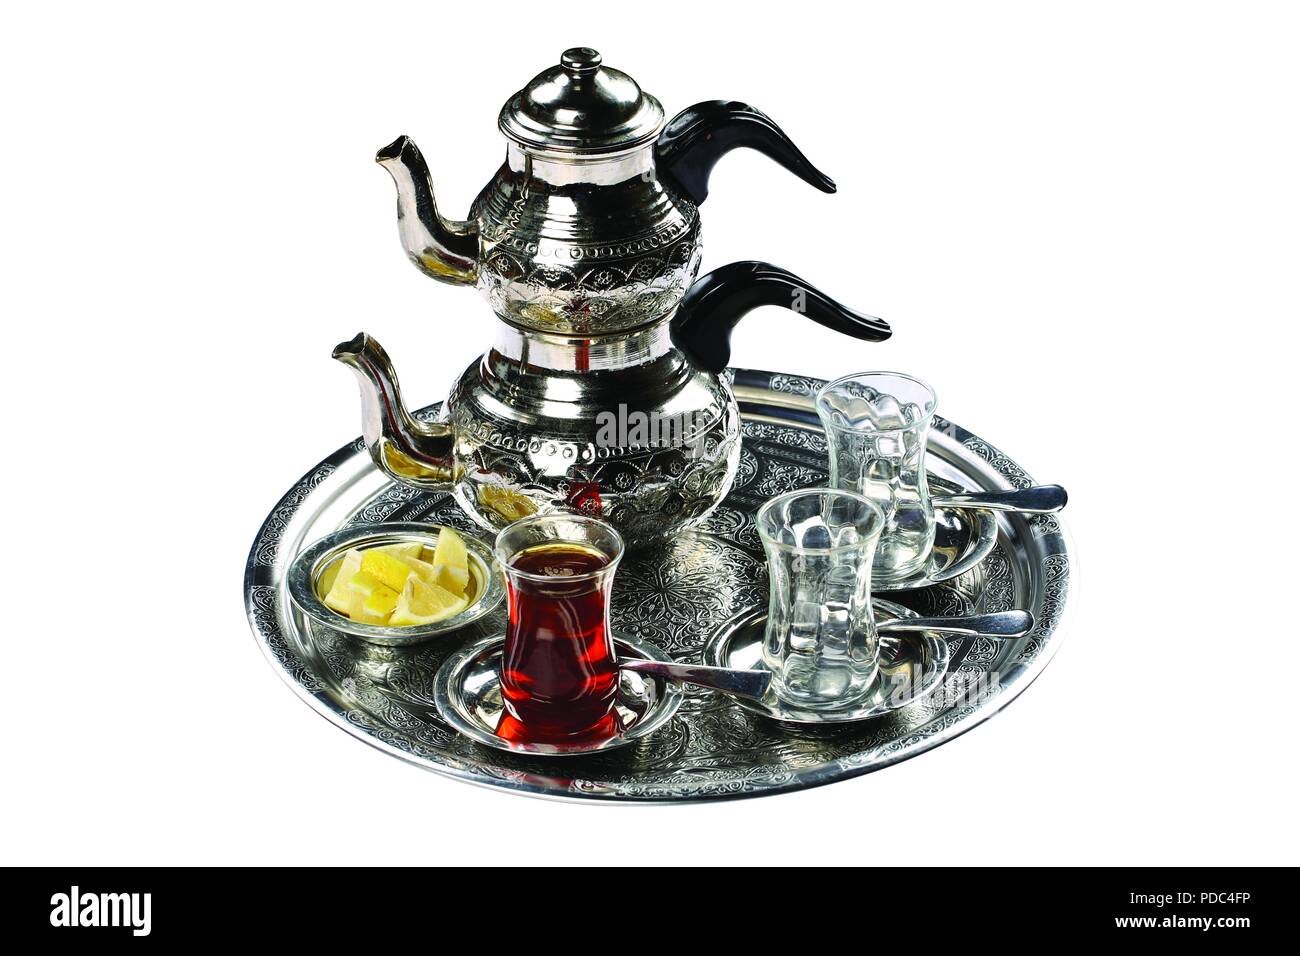 https://c8.alamy.com/comp/PDC4FP/turkish-tea-pot-with-glass-of-tea-PDC4FP.jpg